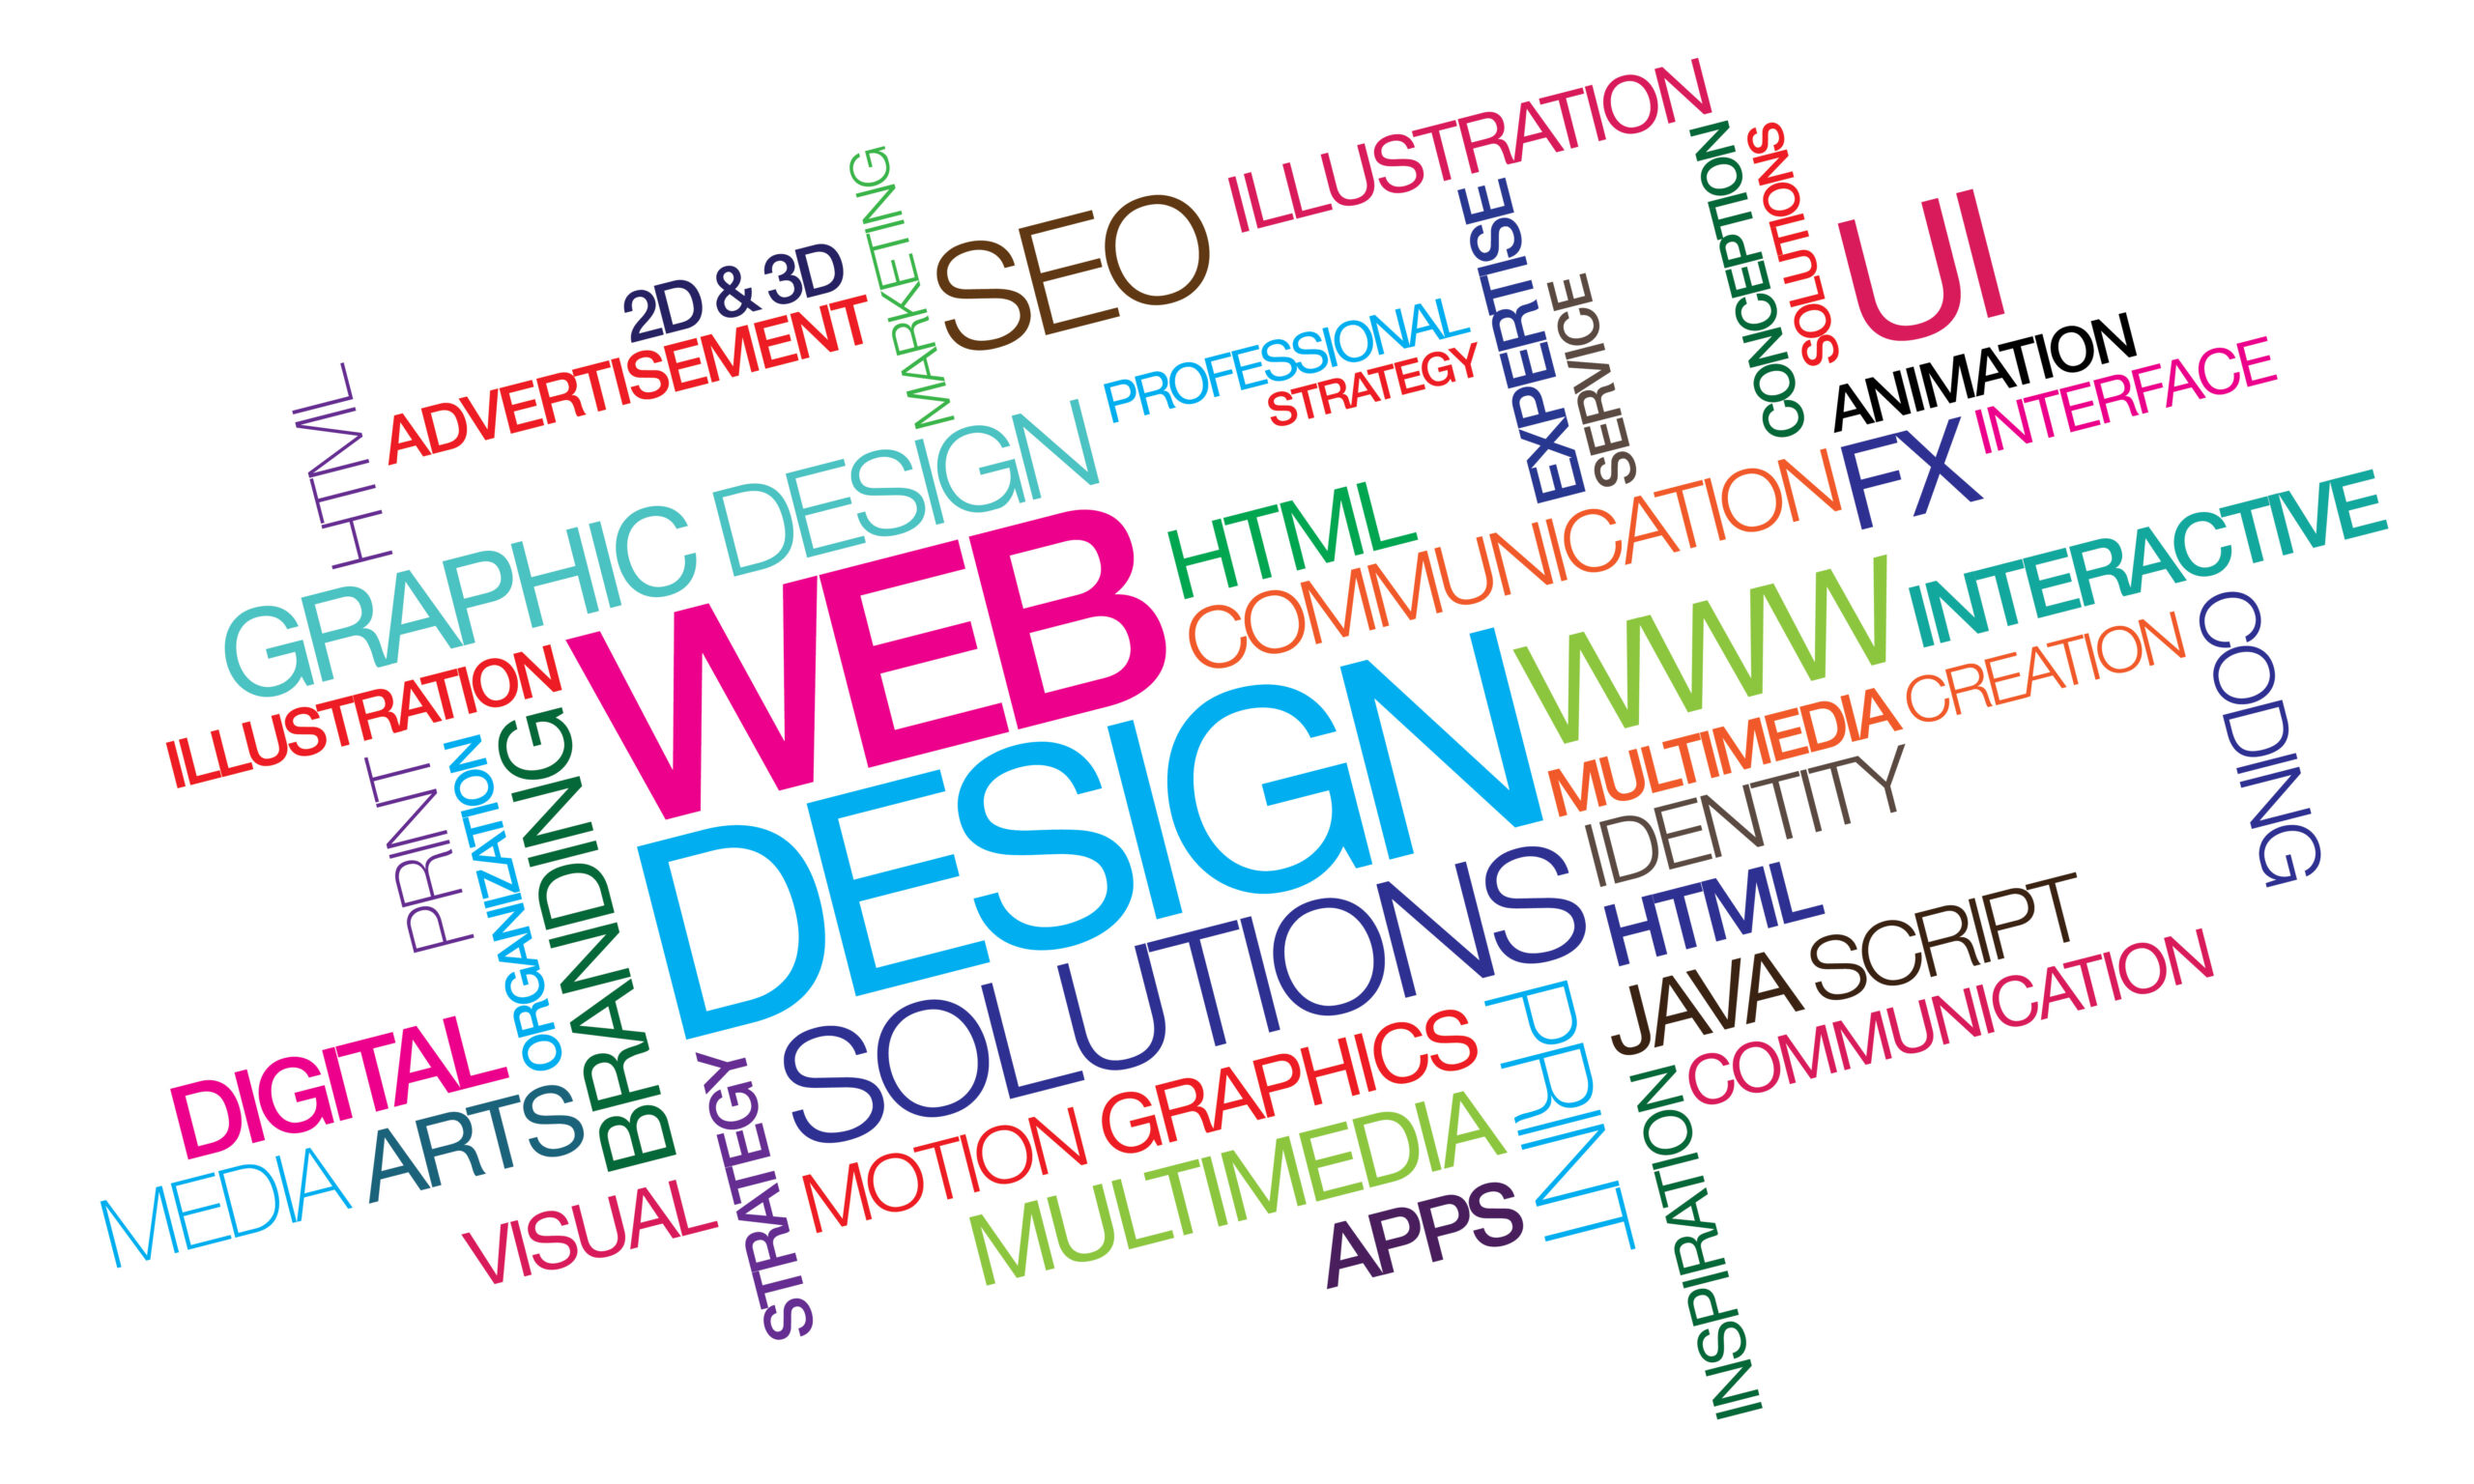 Web Design Solutions